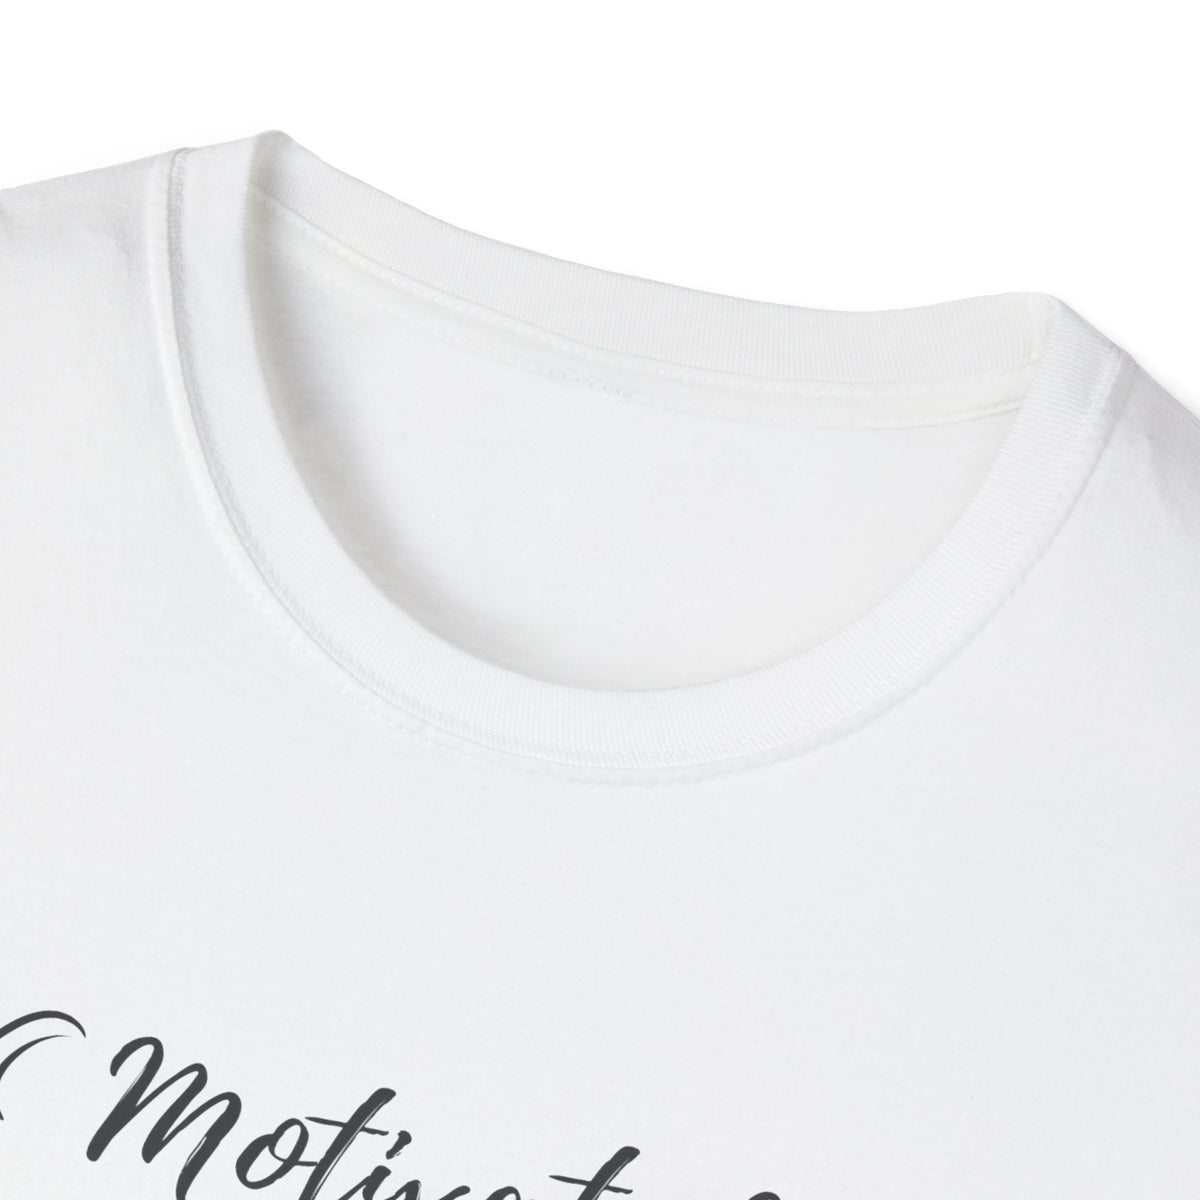 Motivated Mompreneur Unisex T-Shirt-Ashley&#39;s Artistries